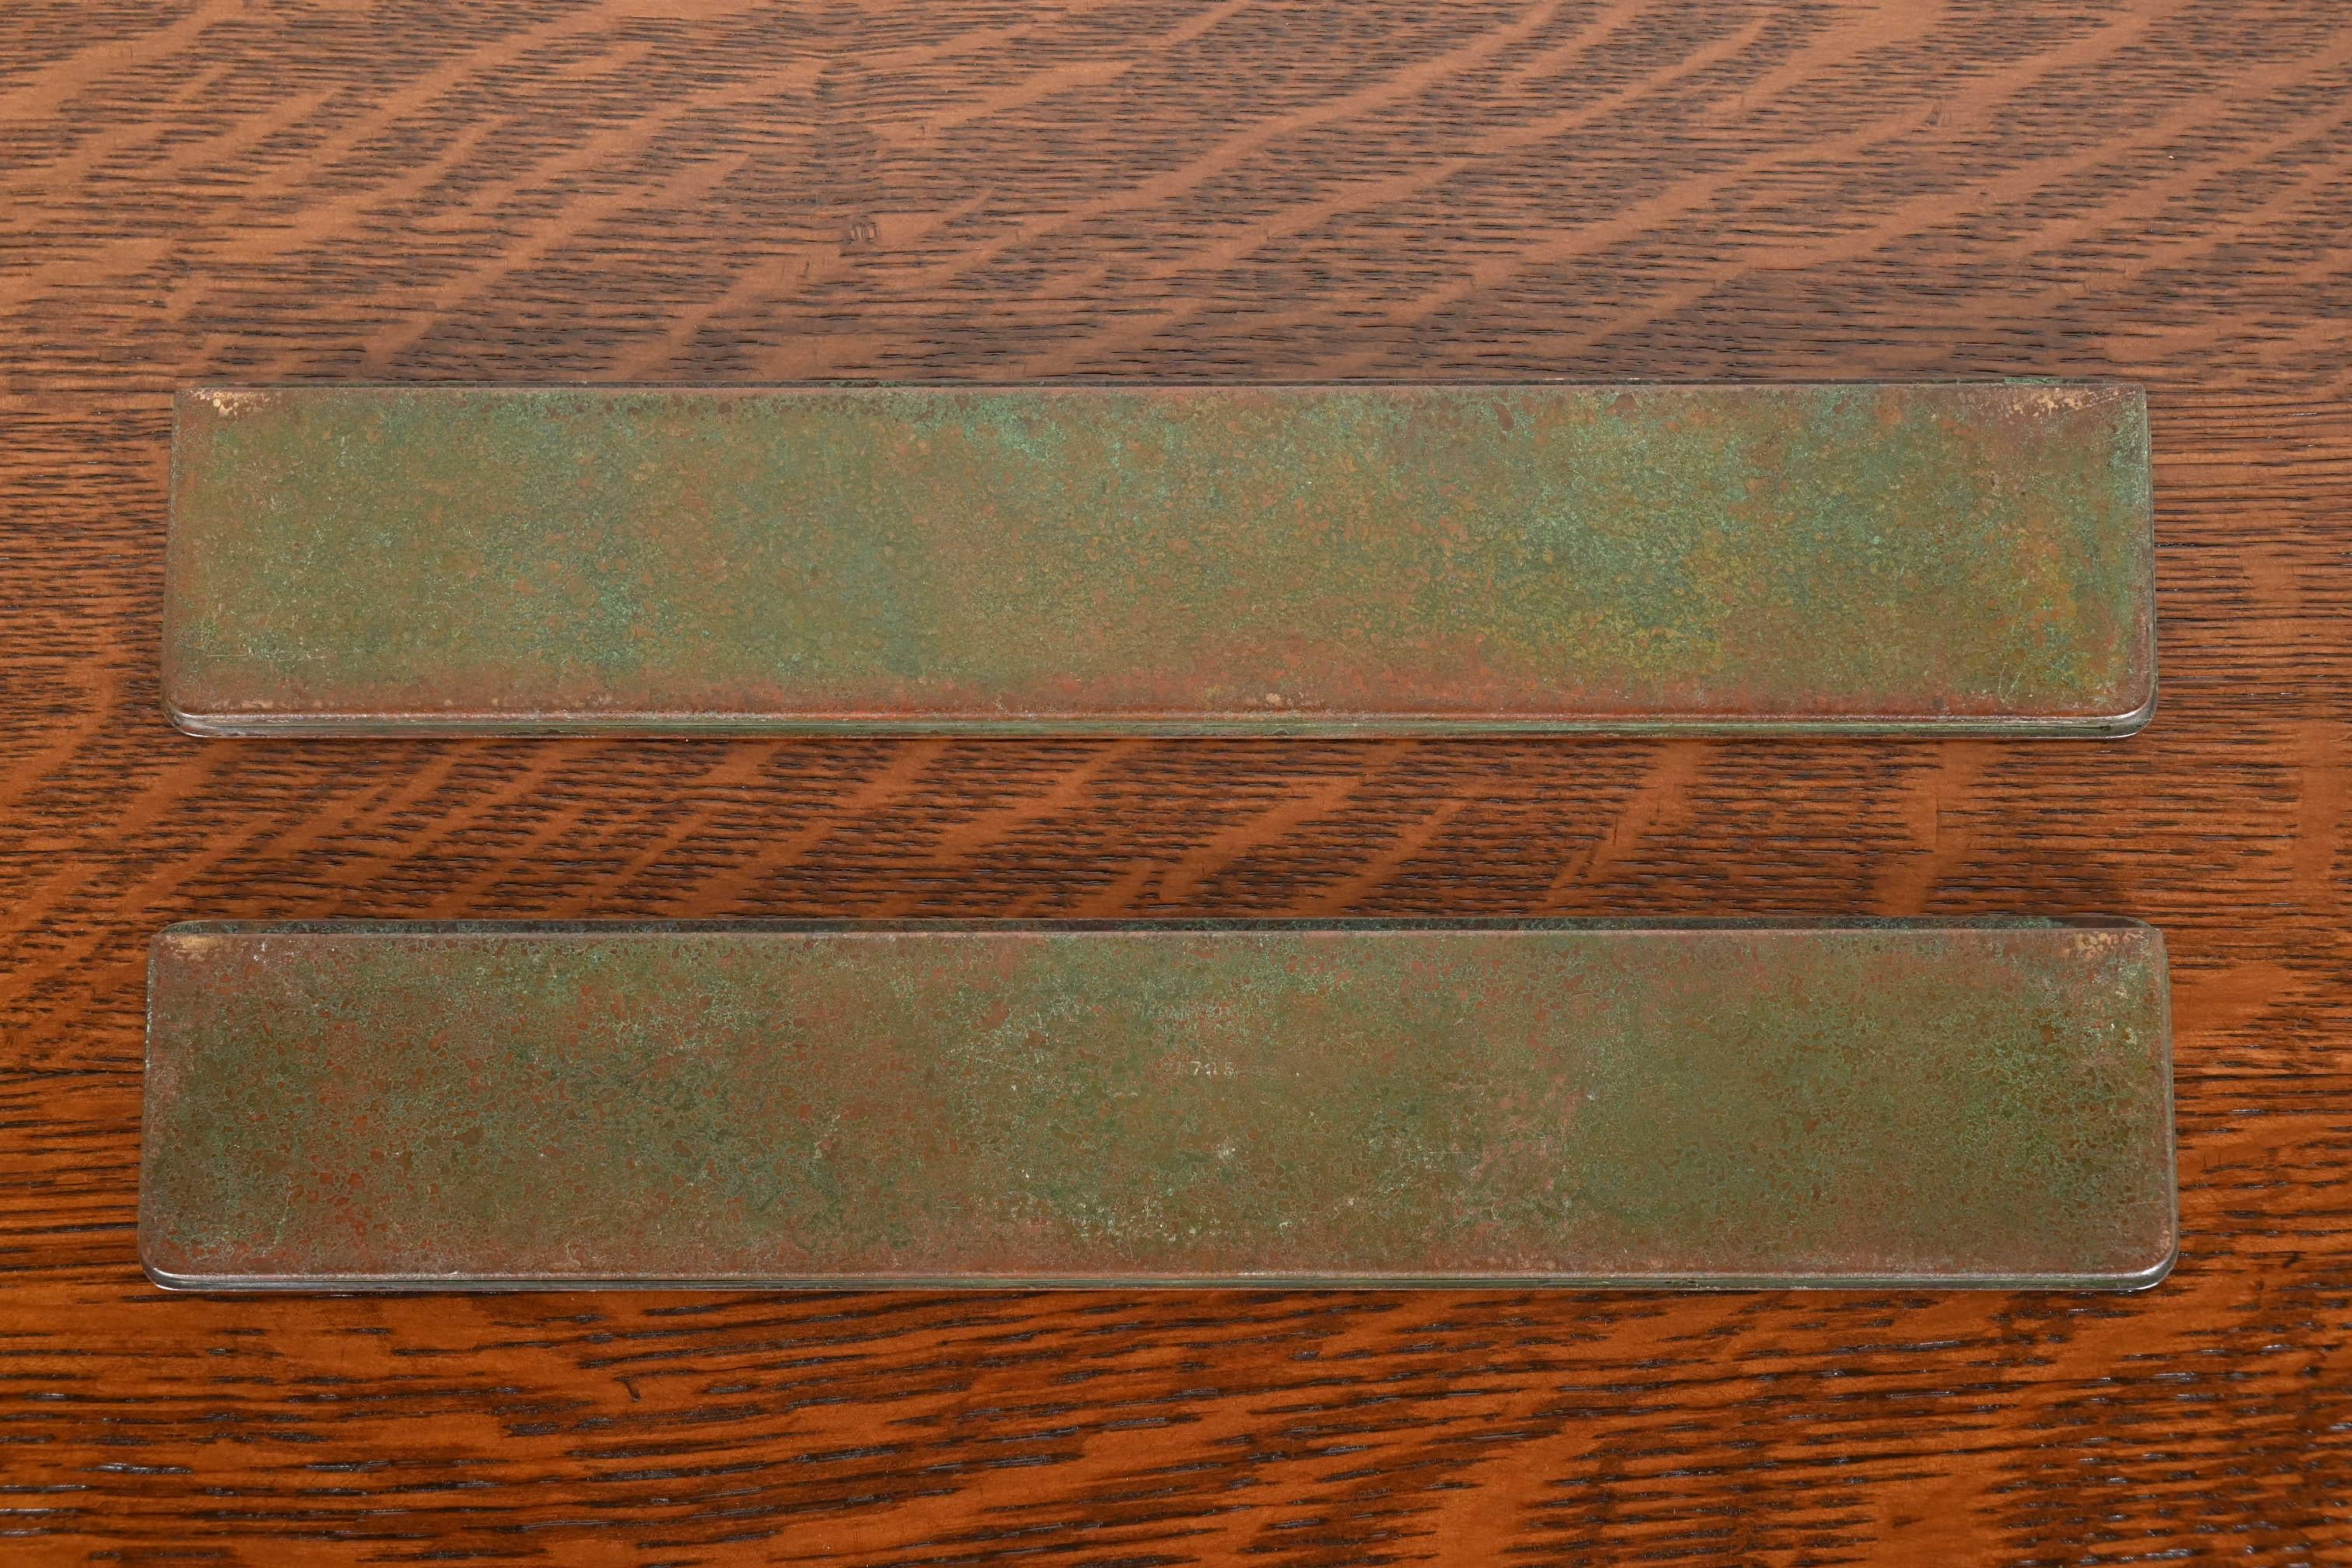 Tiffany Studios Graduate Pattern Bronze Blotter Ends With Leather Desk Blotter 4